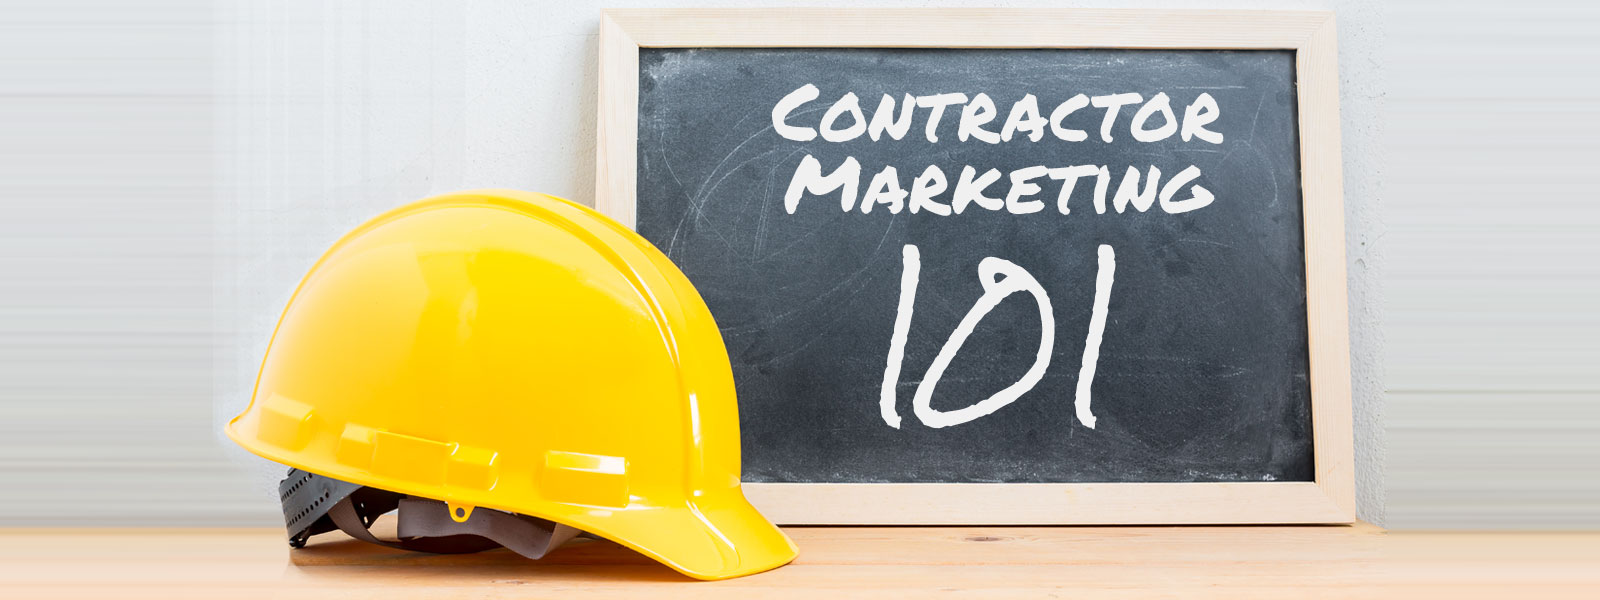 Contractor Marketing 101 Banner